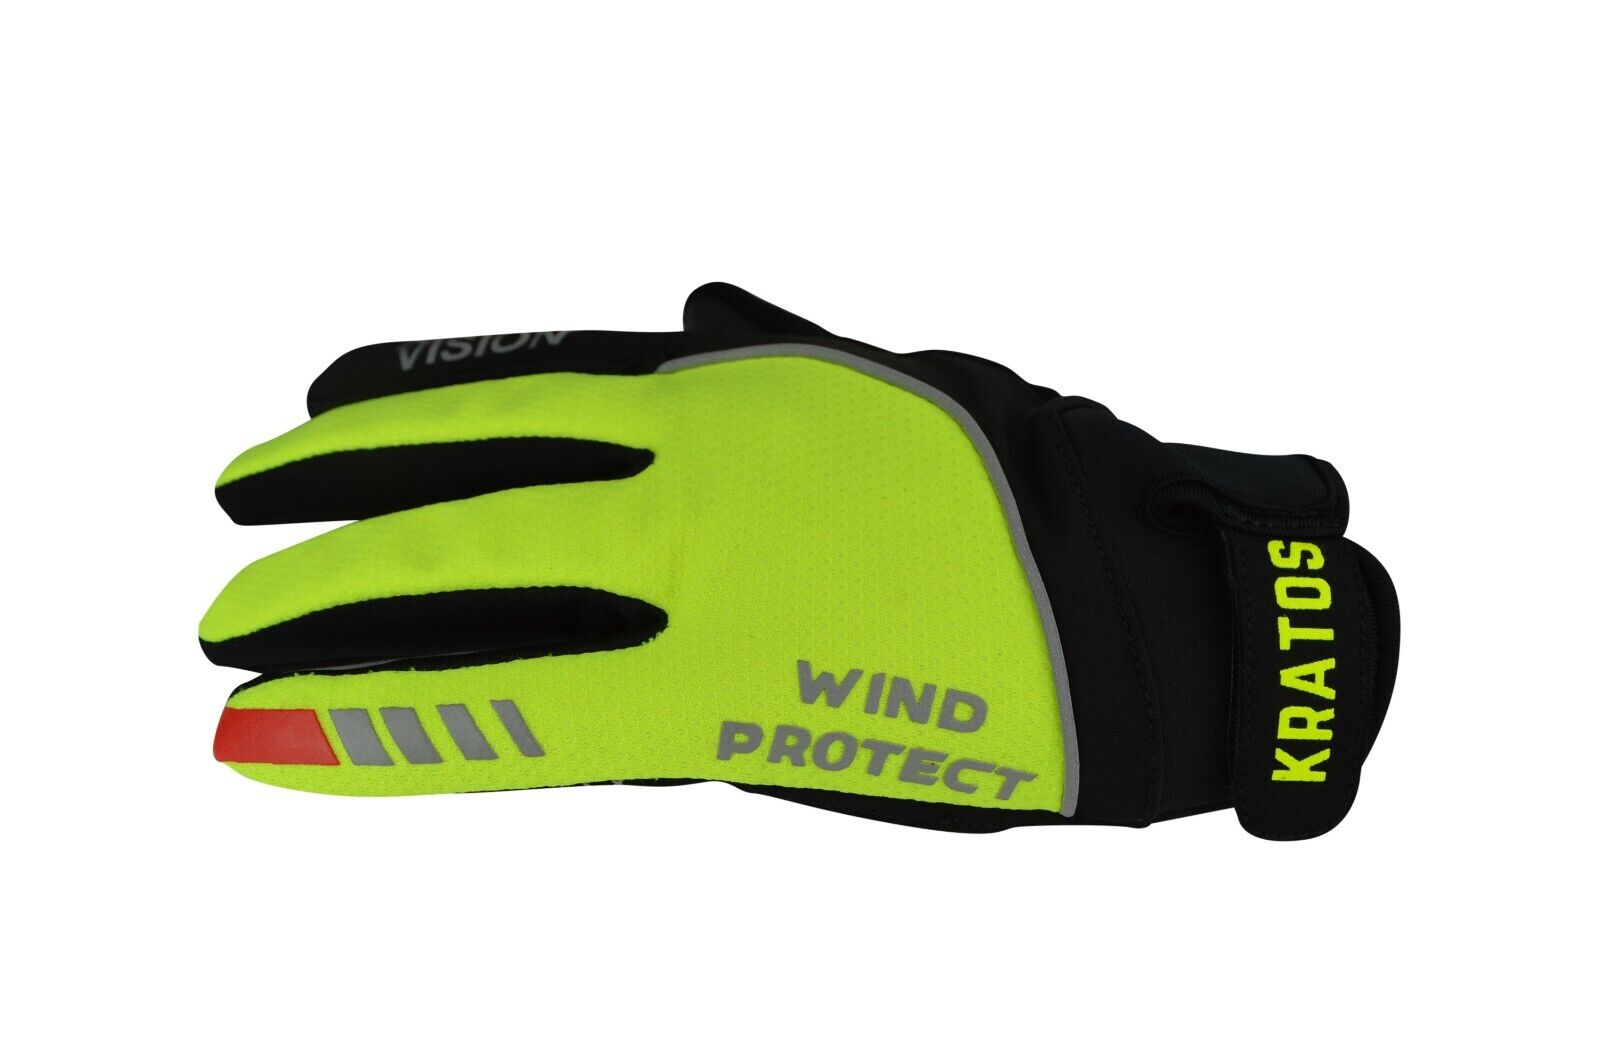 Kratos Cycling Gloves Full Finger Gel Gloves Touch screen MTB BMX Bike Riding